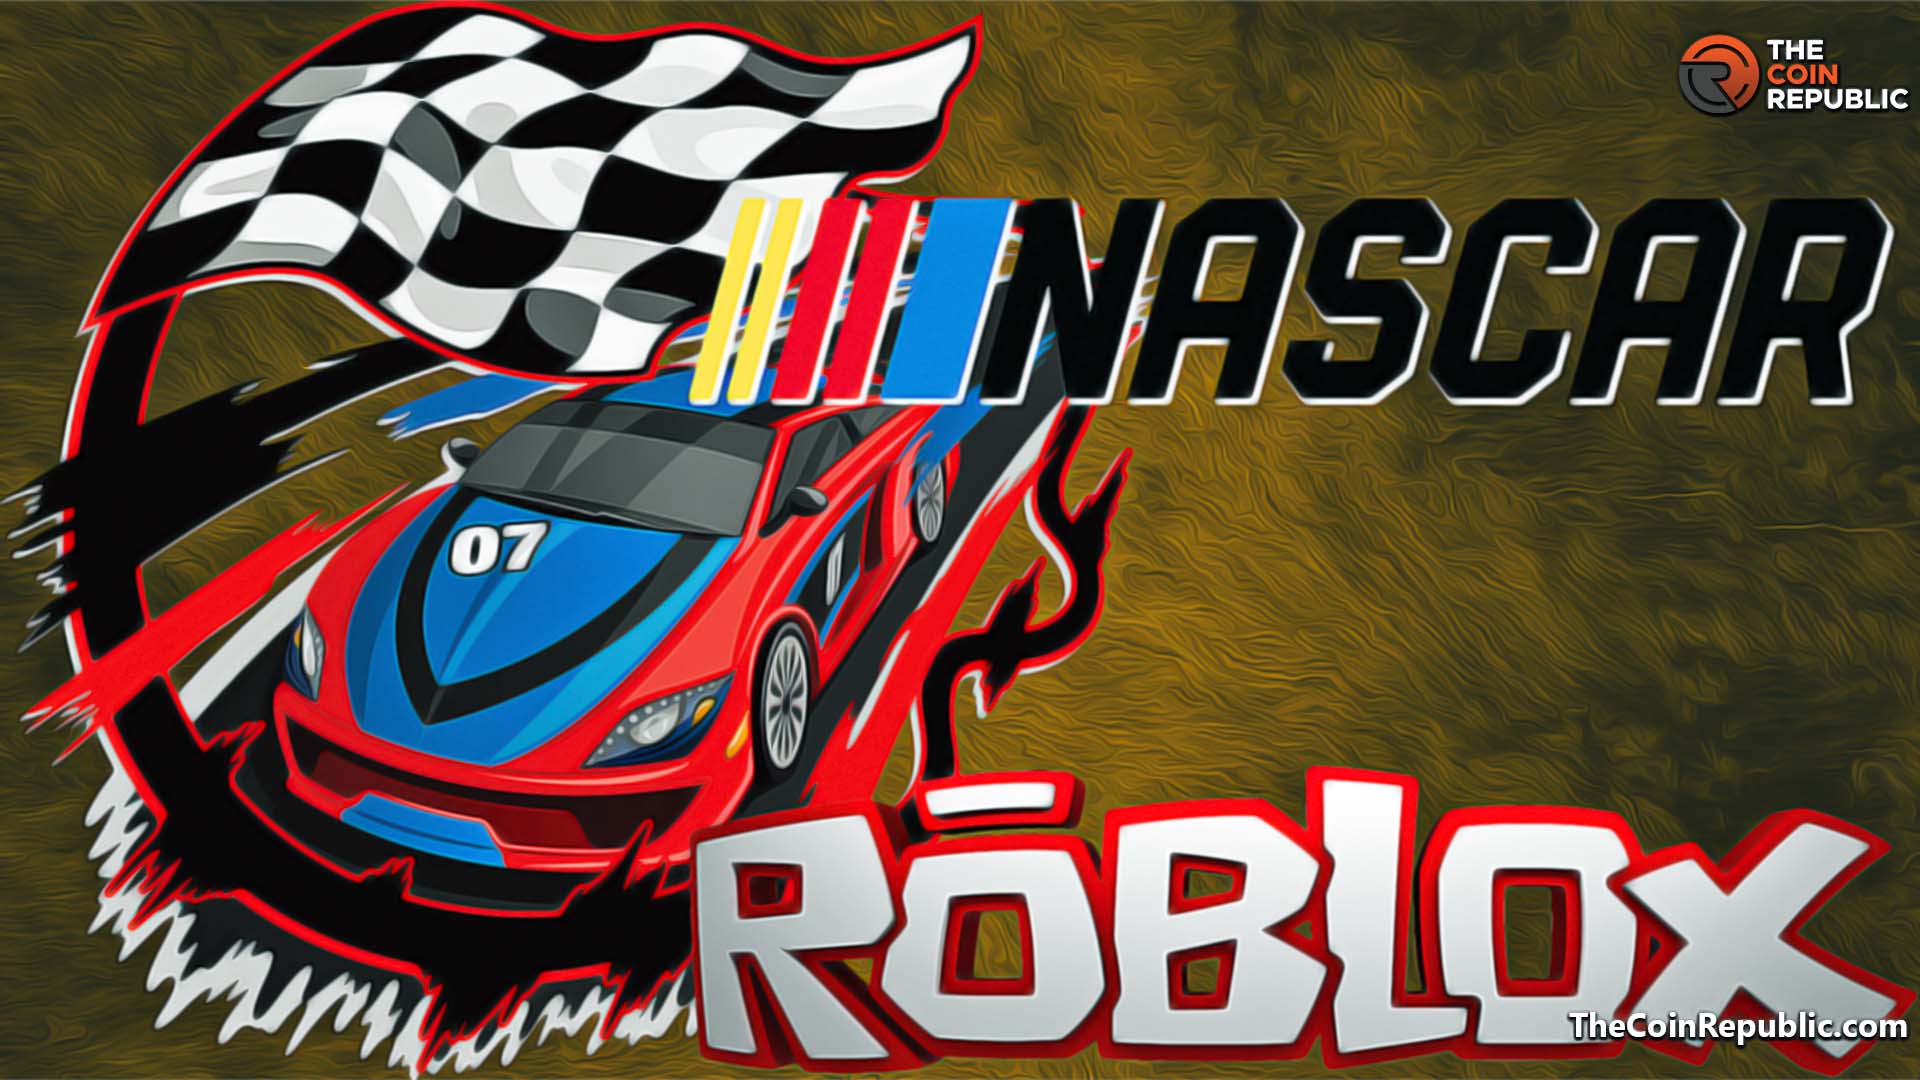 Roblox  RacingGames